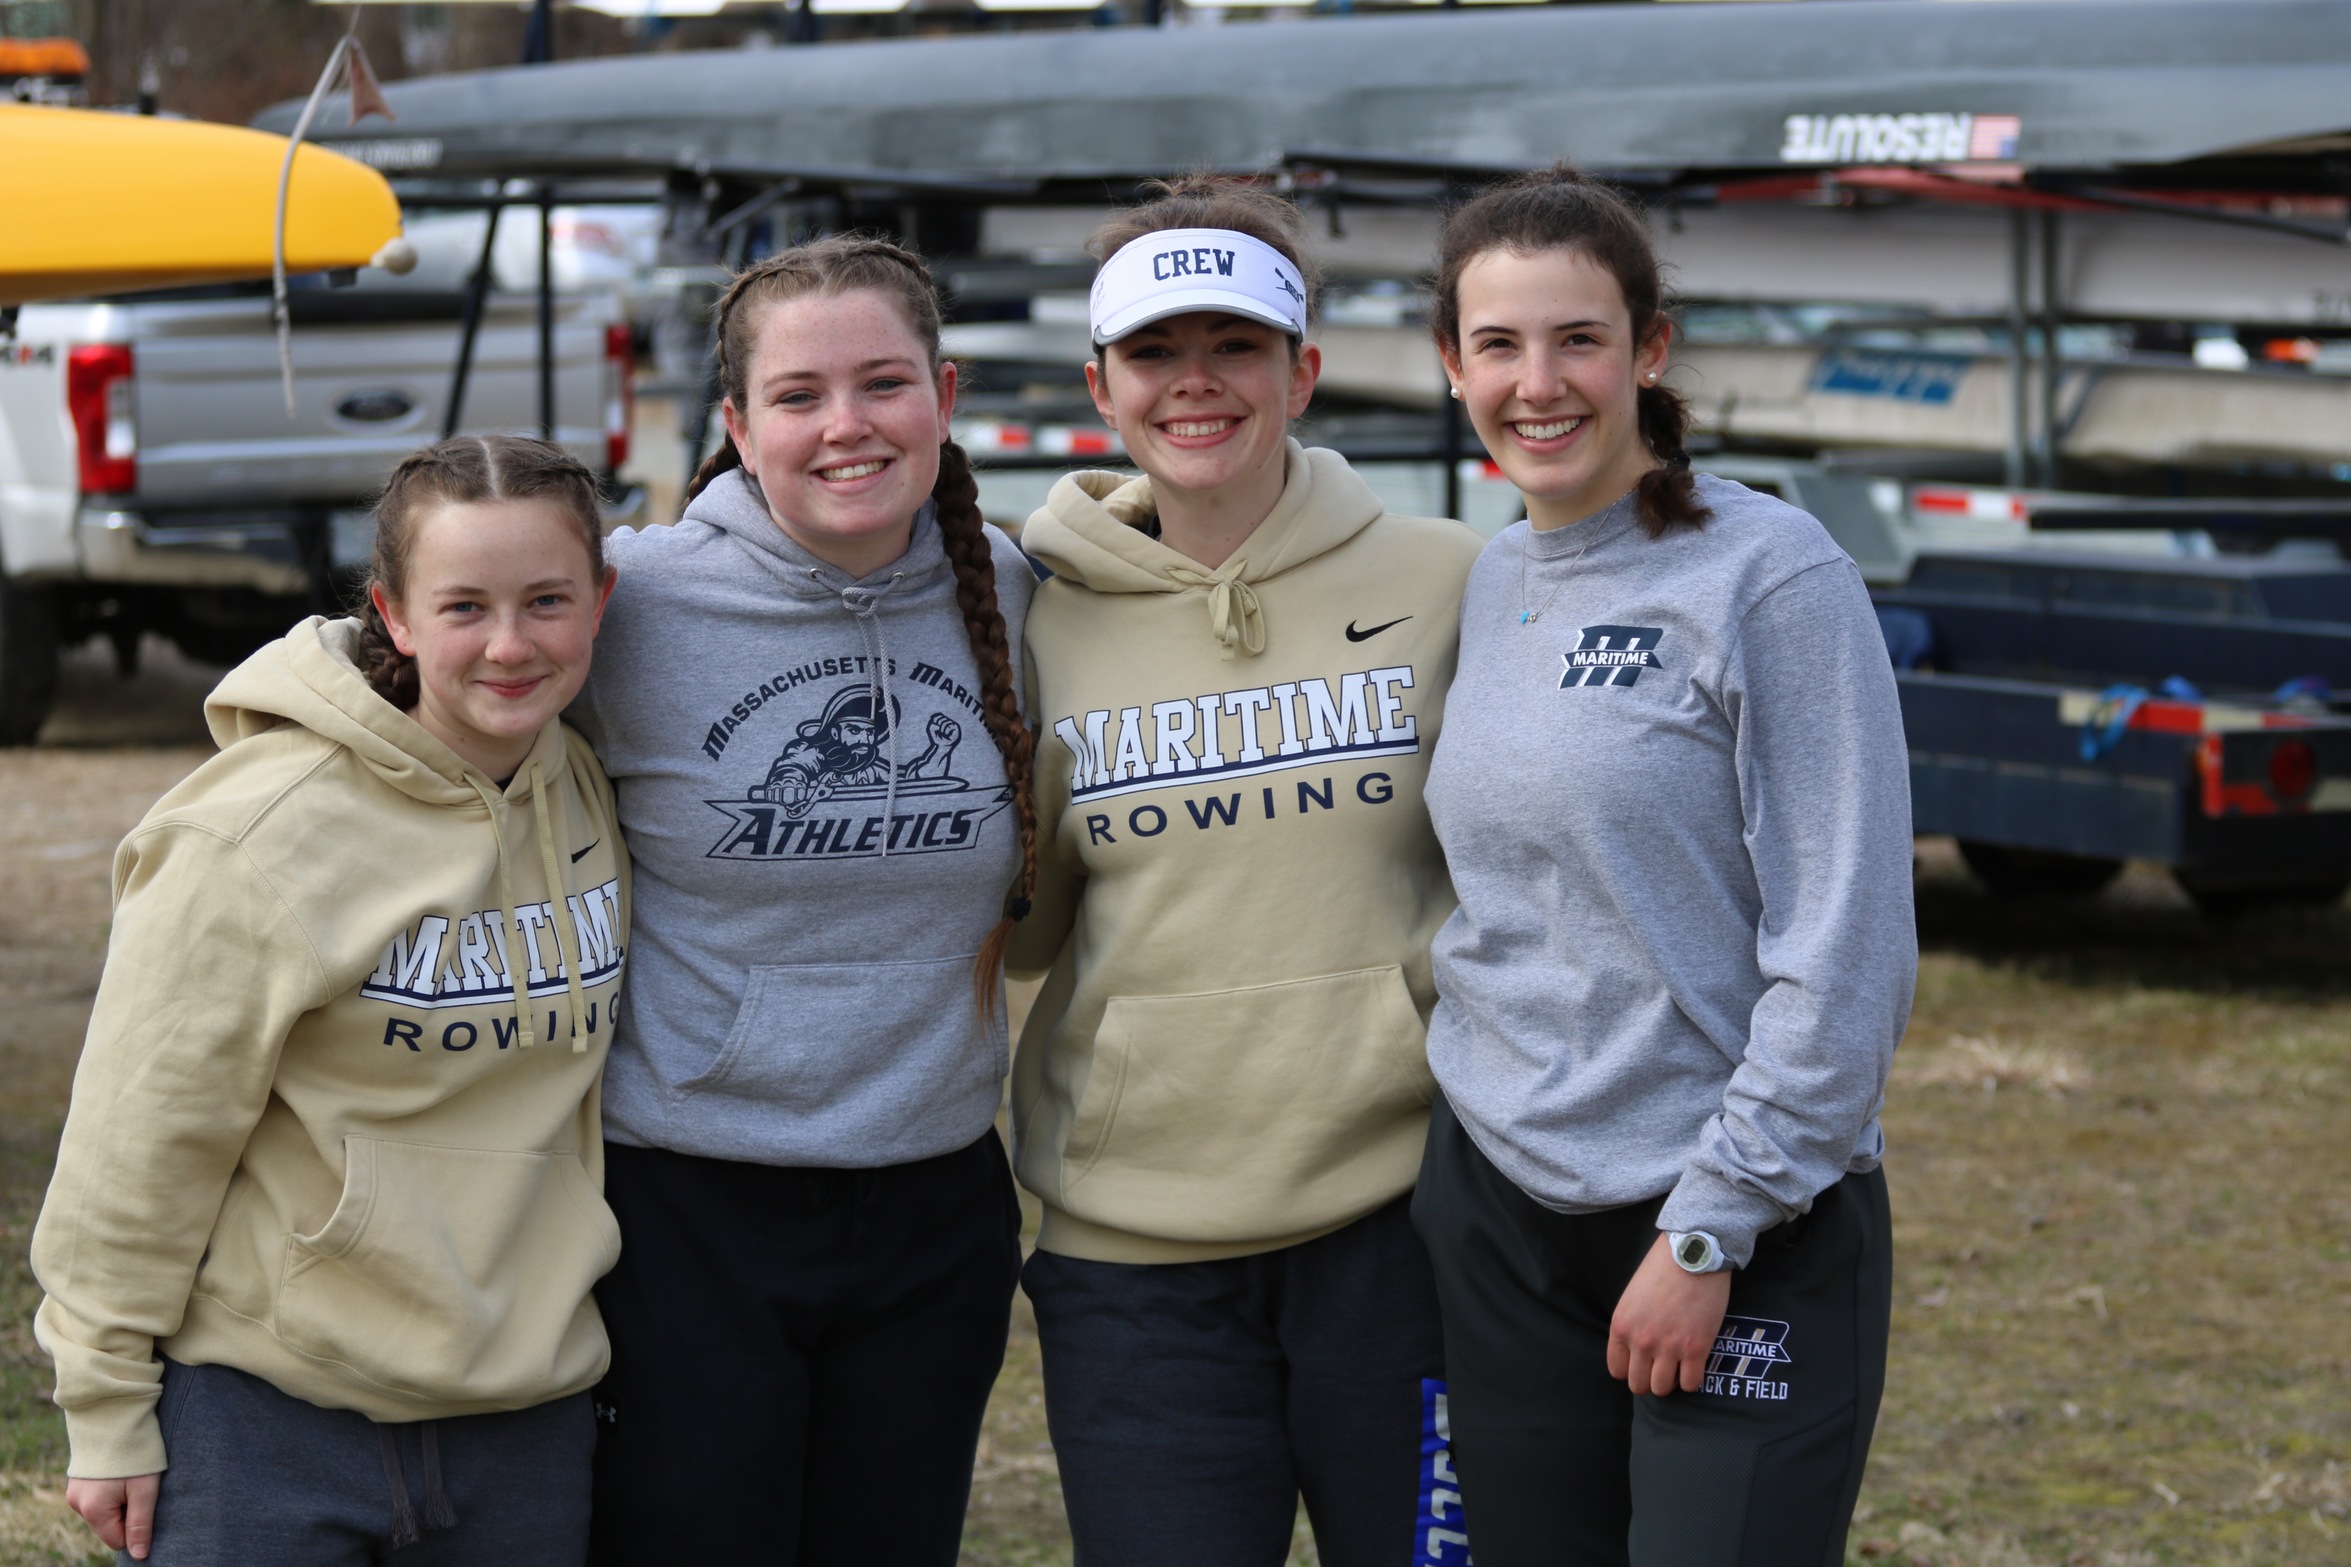 Women's Rowing Wins Big over UMass Lowell